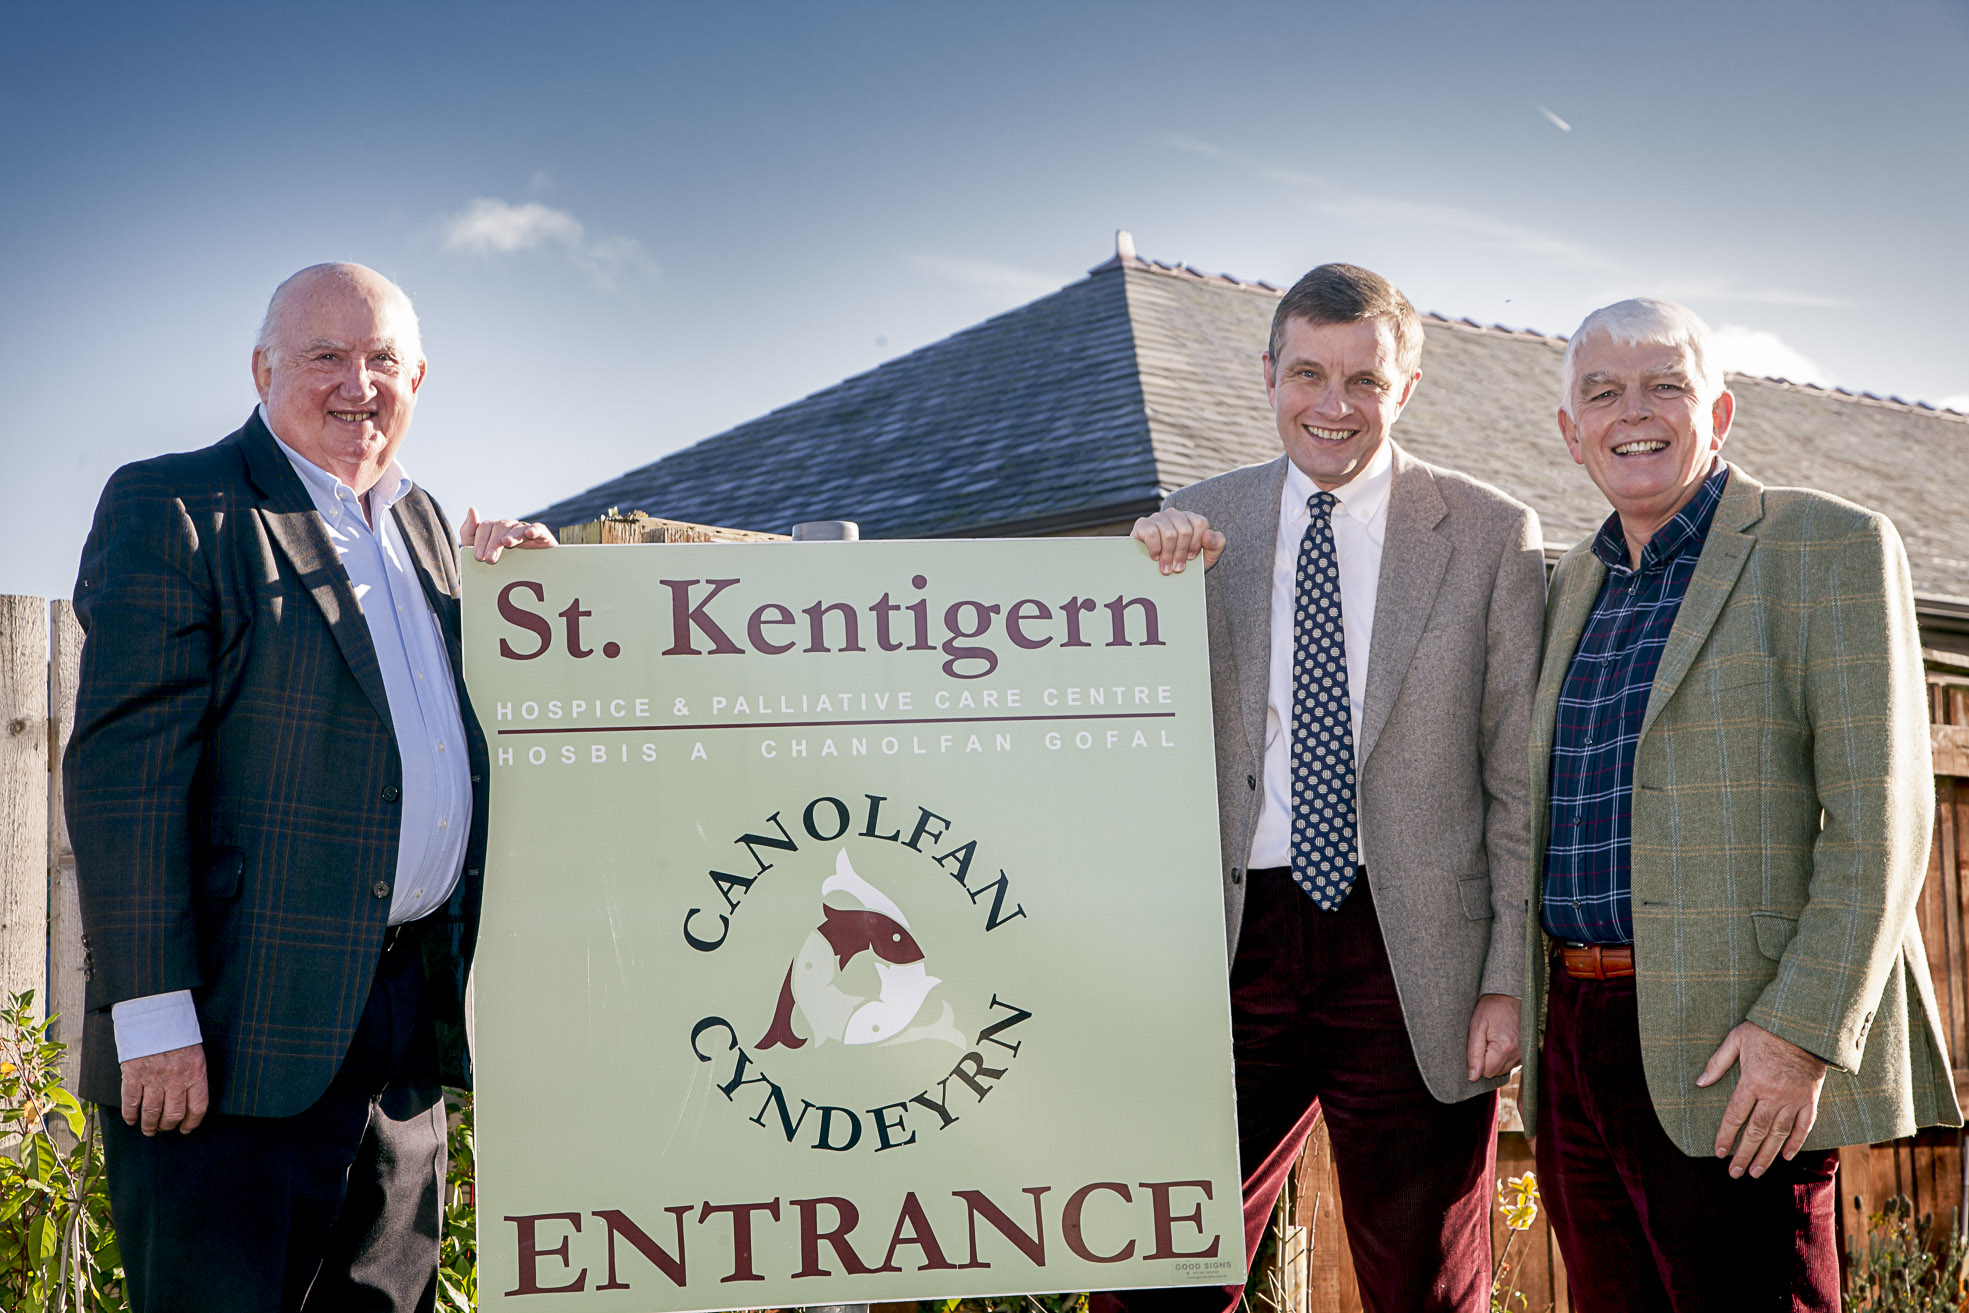 St Kentigern Hospice, St Asaph visit from David Jones MP. Pictured is St Kentigern Chairman Trefor Jones , David Jones MP and Ian Bellingham Chief Executive at St Kentigern